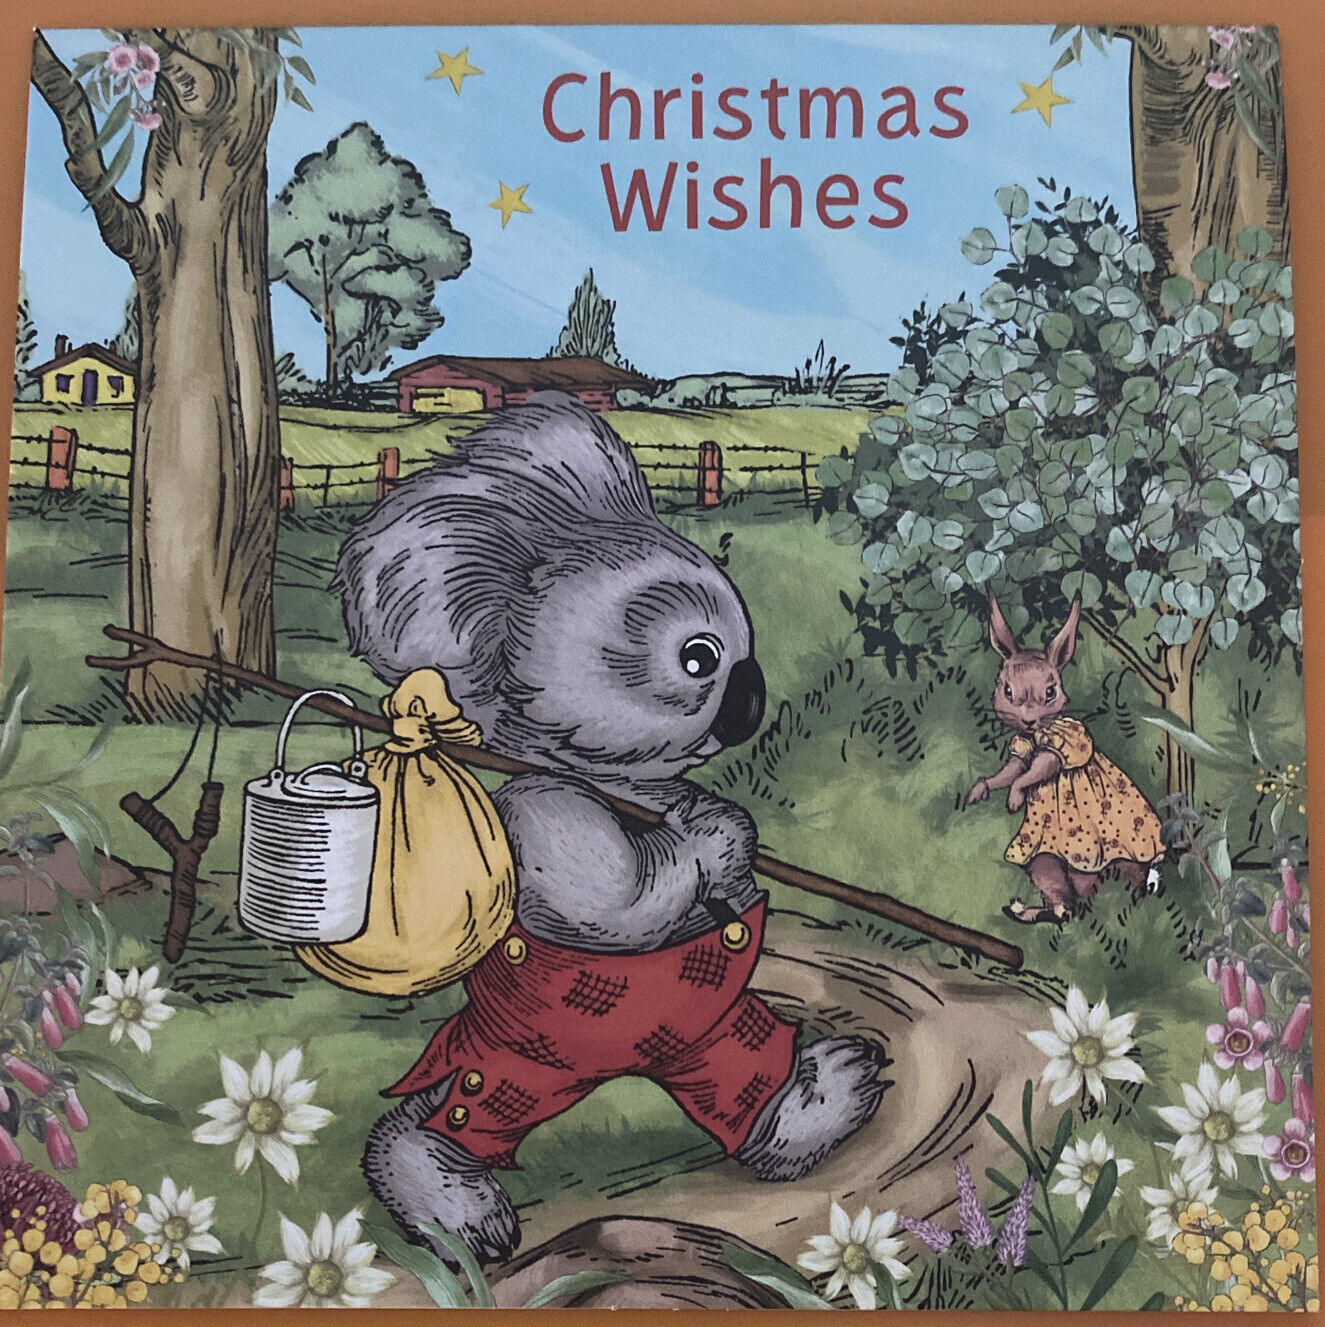 Blinky Bill Christmas Greeting Card - Australiana Bush Christmas